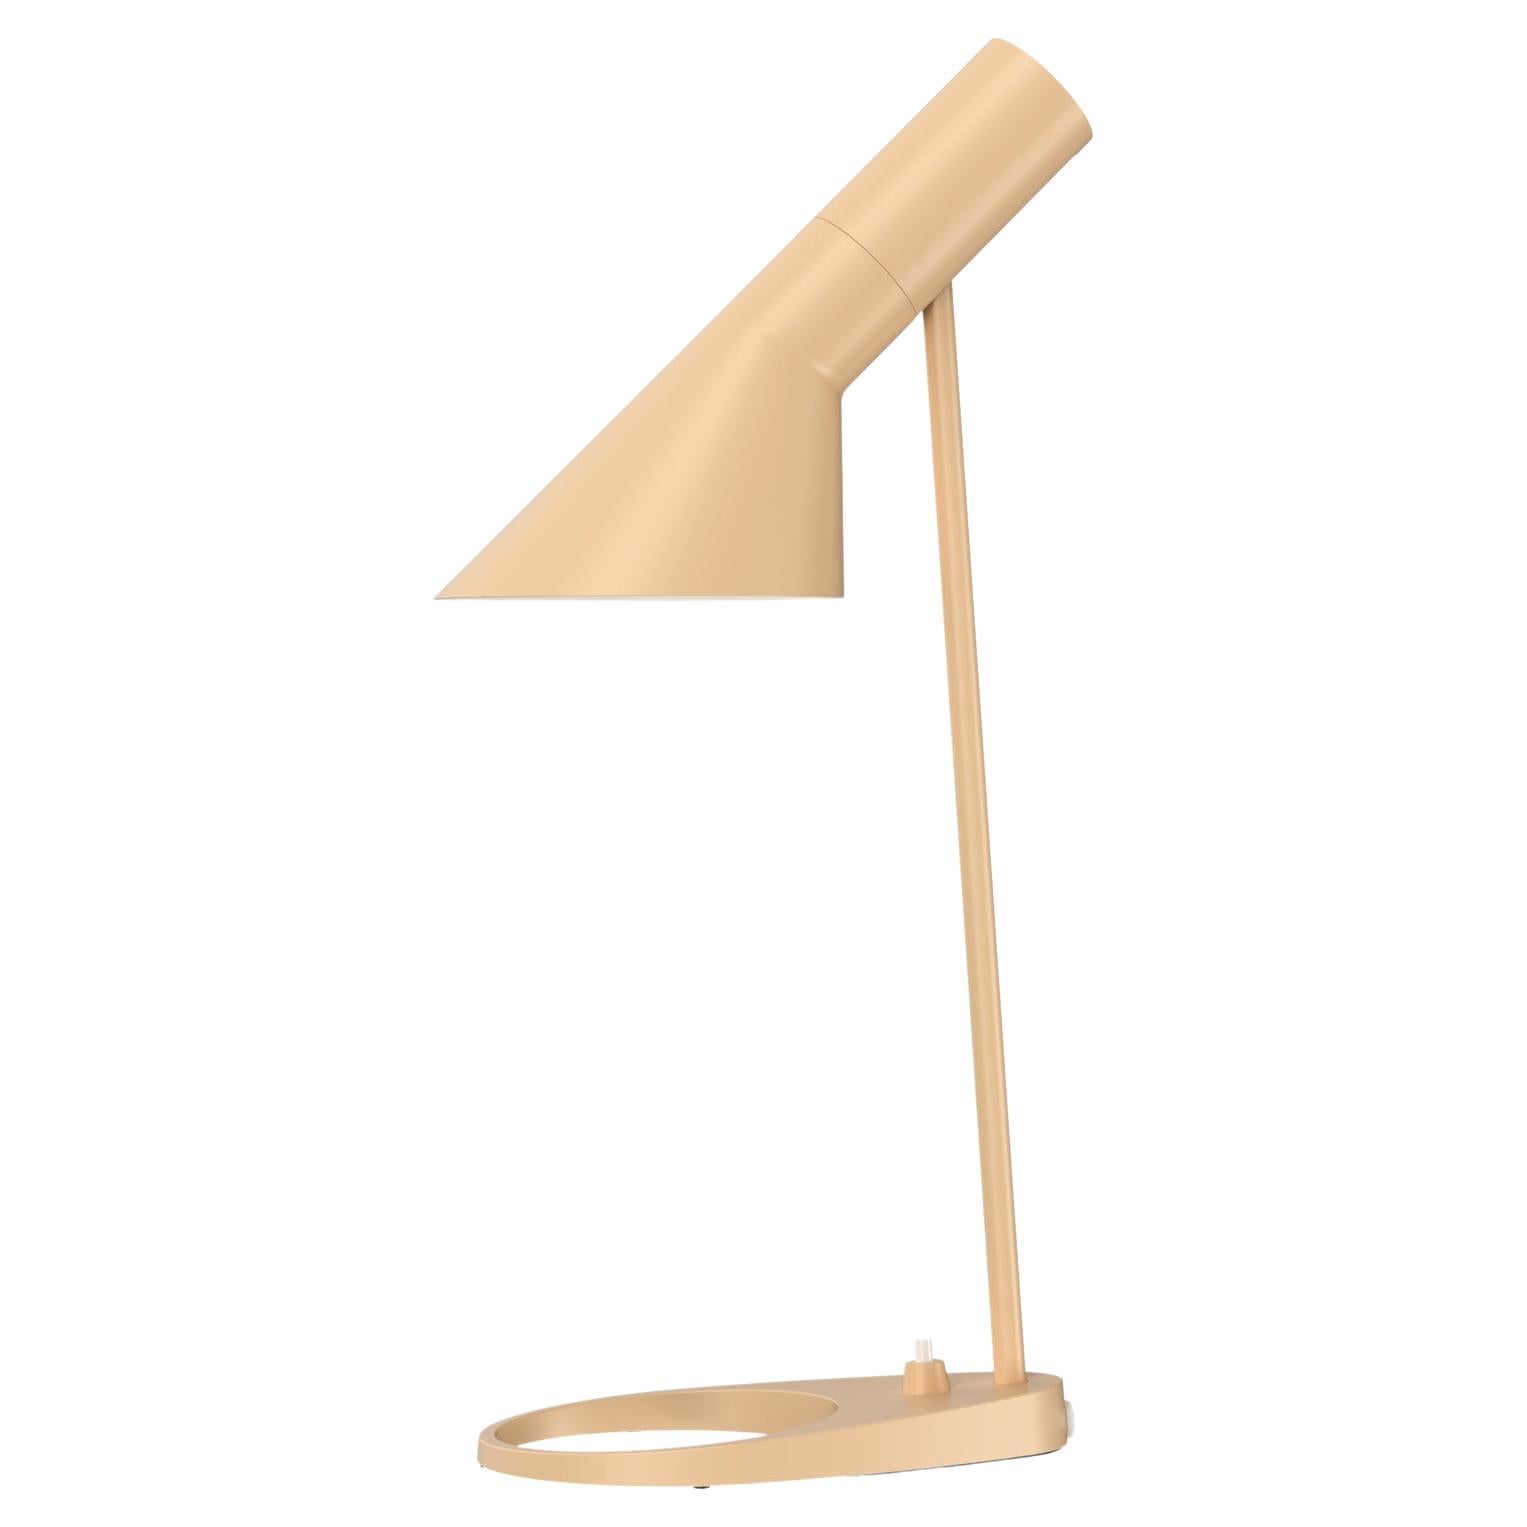 Arne Jacobsen 'AJ Mini' Table Lamp in Warm Sand for Louis Poulsen For Sale